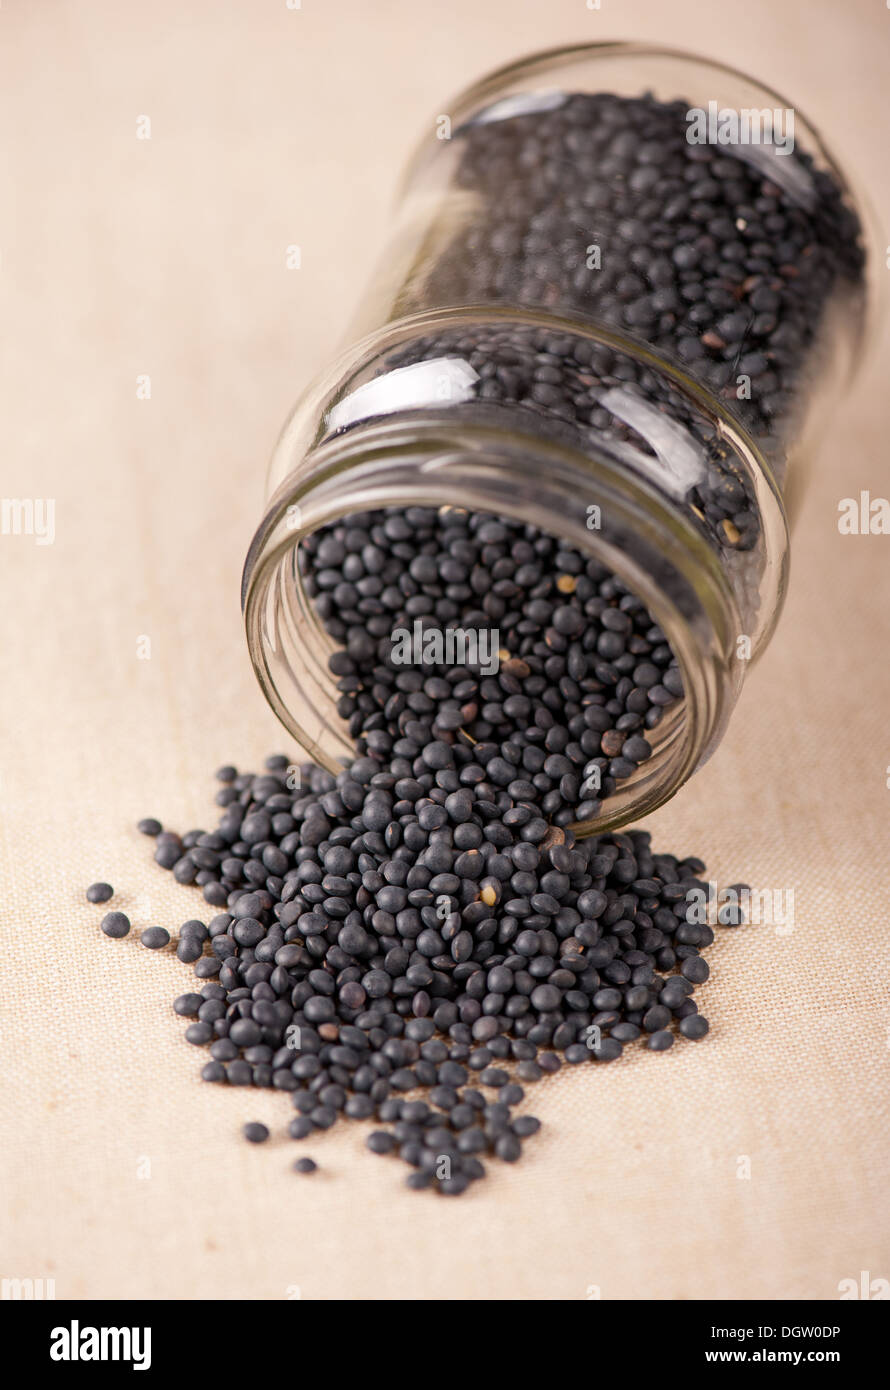 Pile of black beluga lentils spilled out Stock Photo